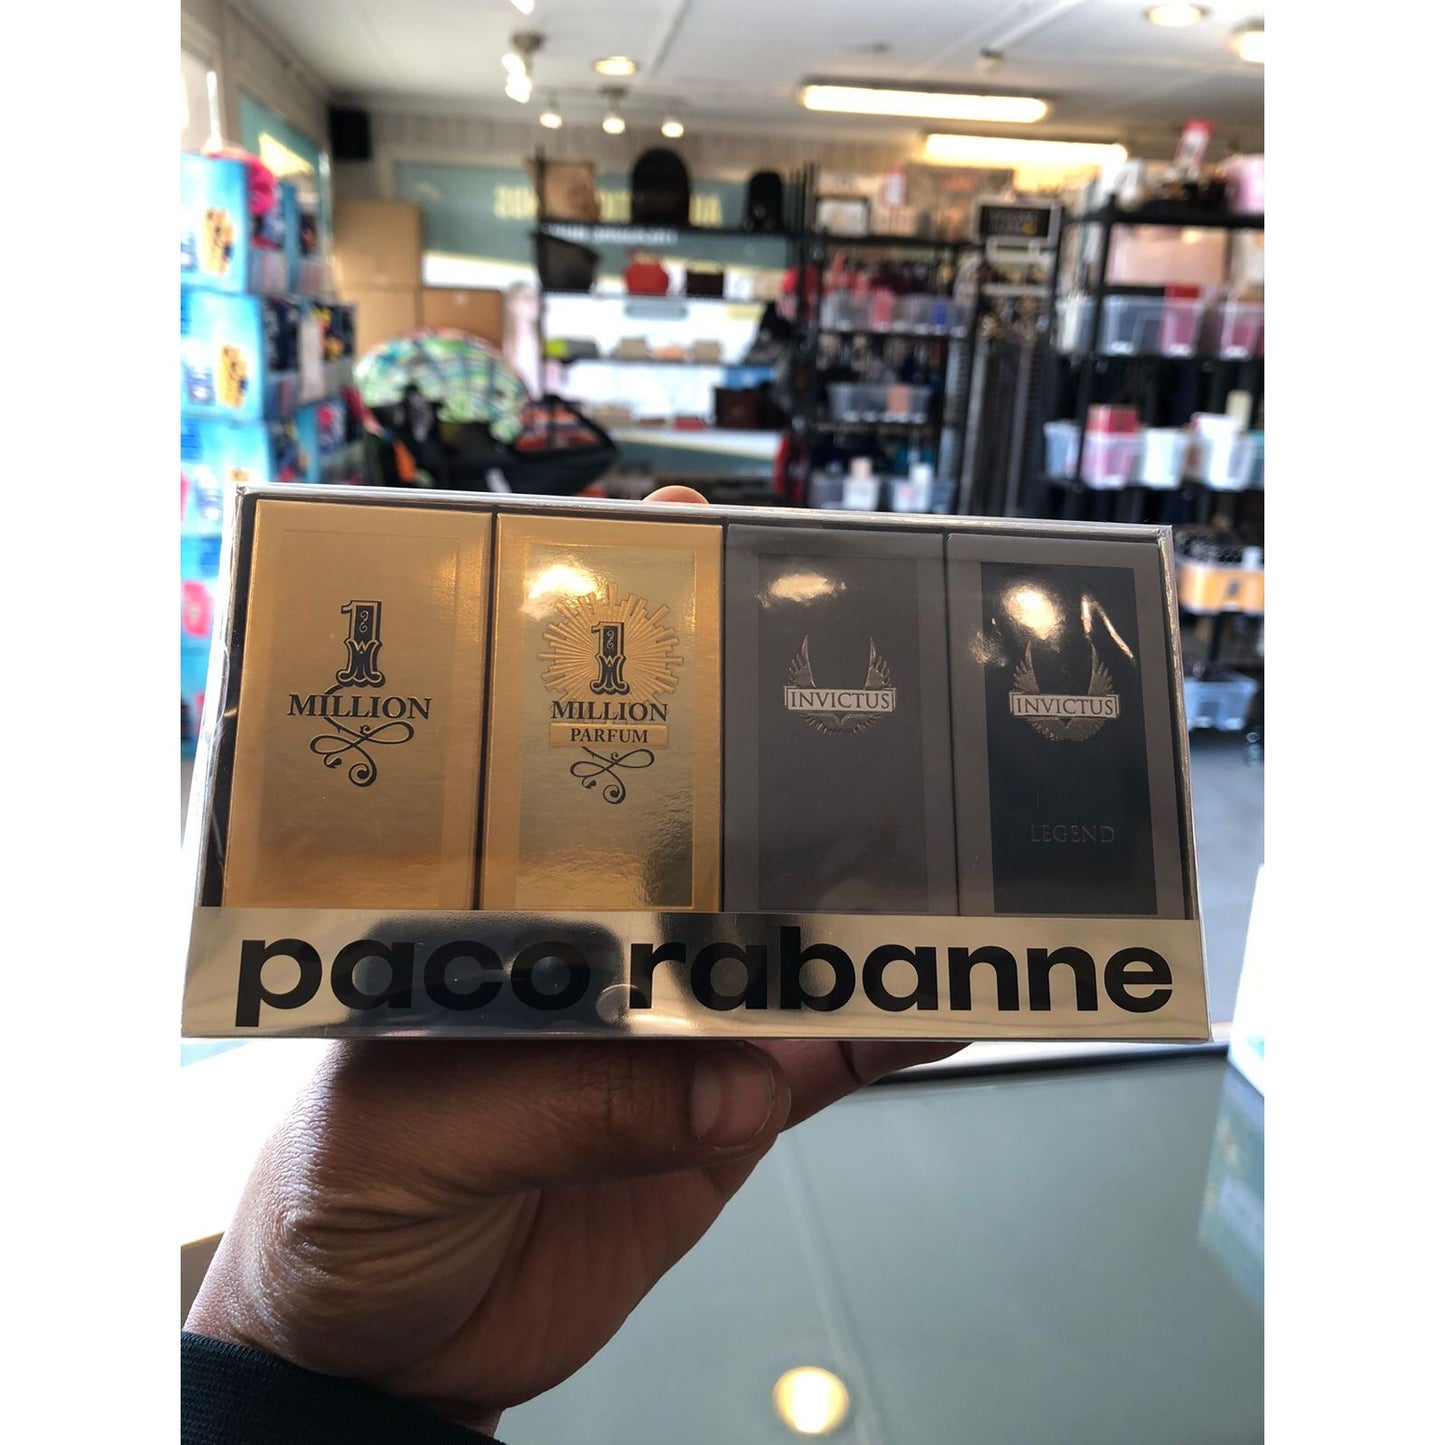 Paco Rabanne 4 Piece Mini Splash Gift Set for Men 4x5ml